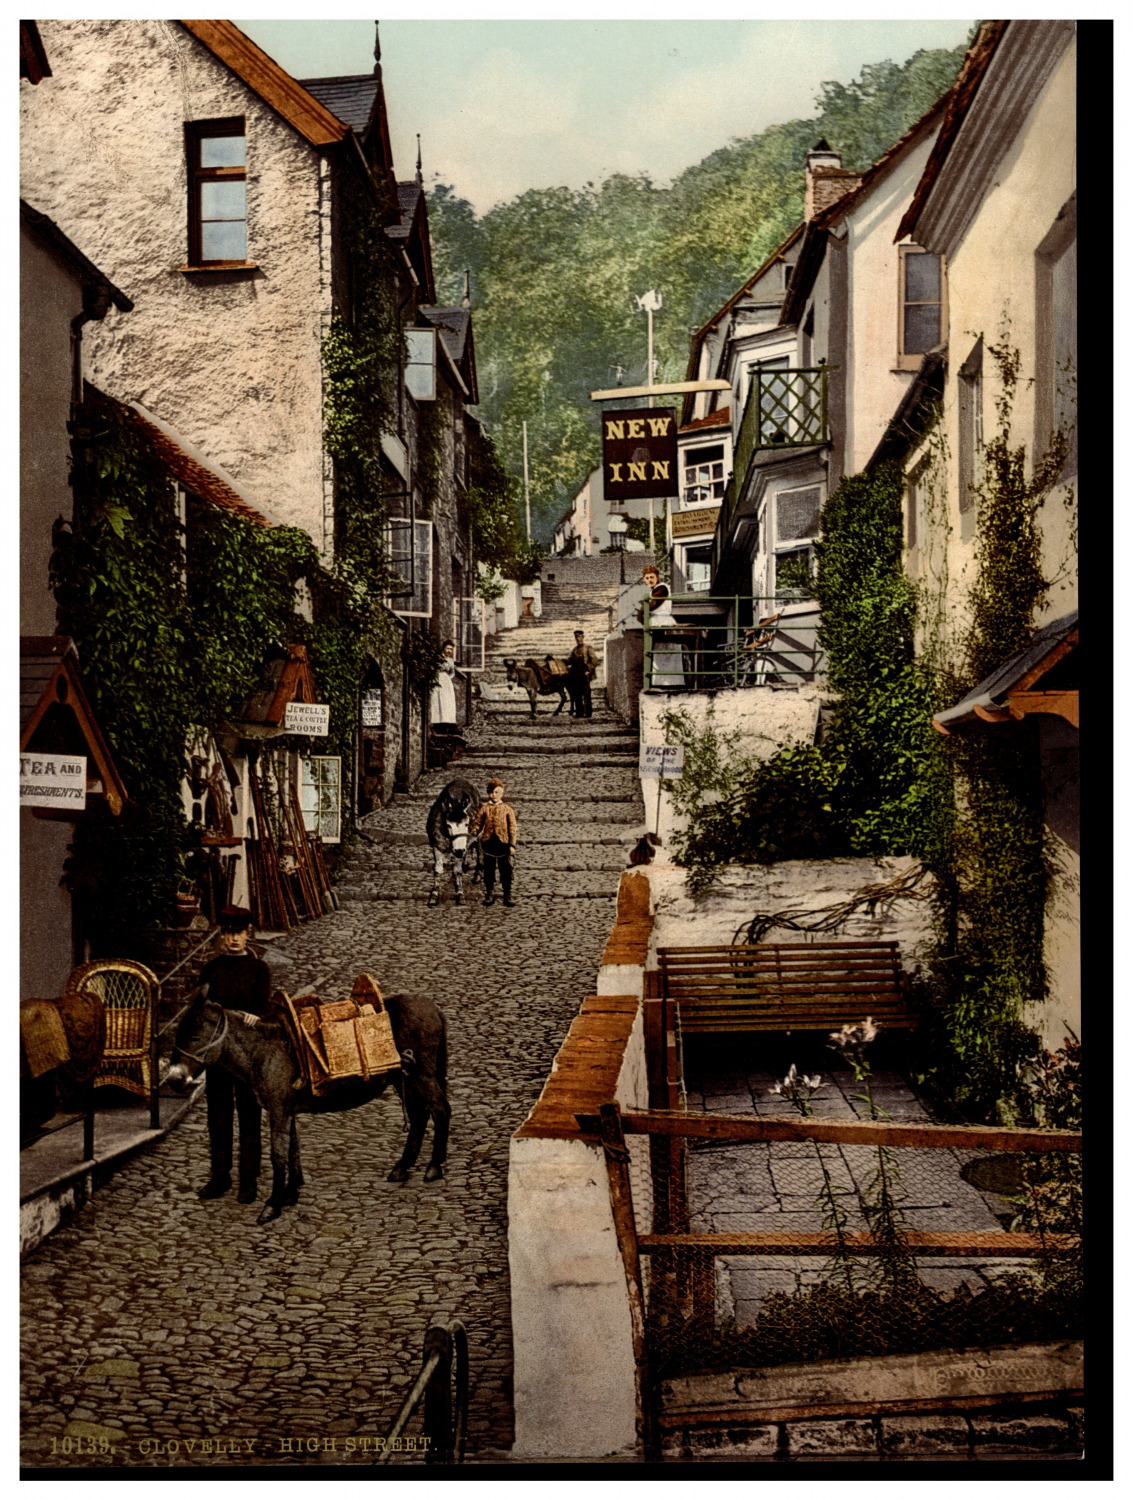 England. Clovelly. High Street. Vintage photochrome by P.Z, photochrome Zurich